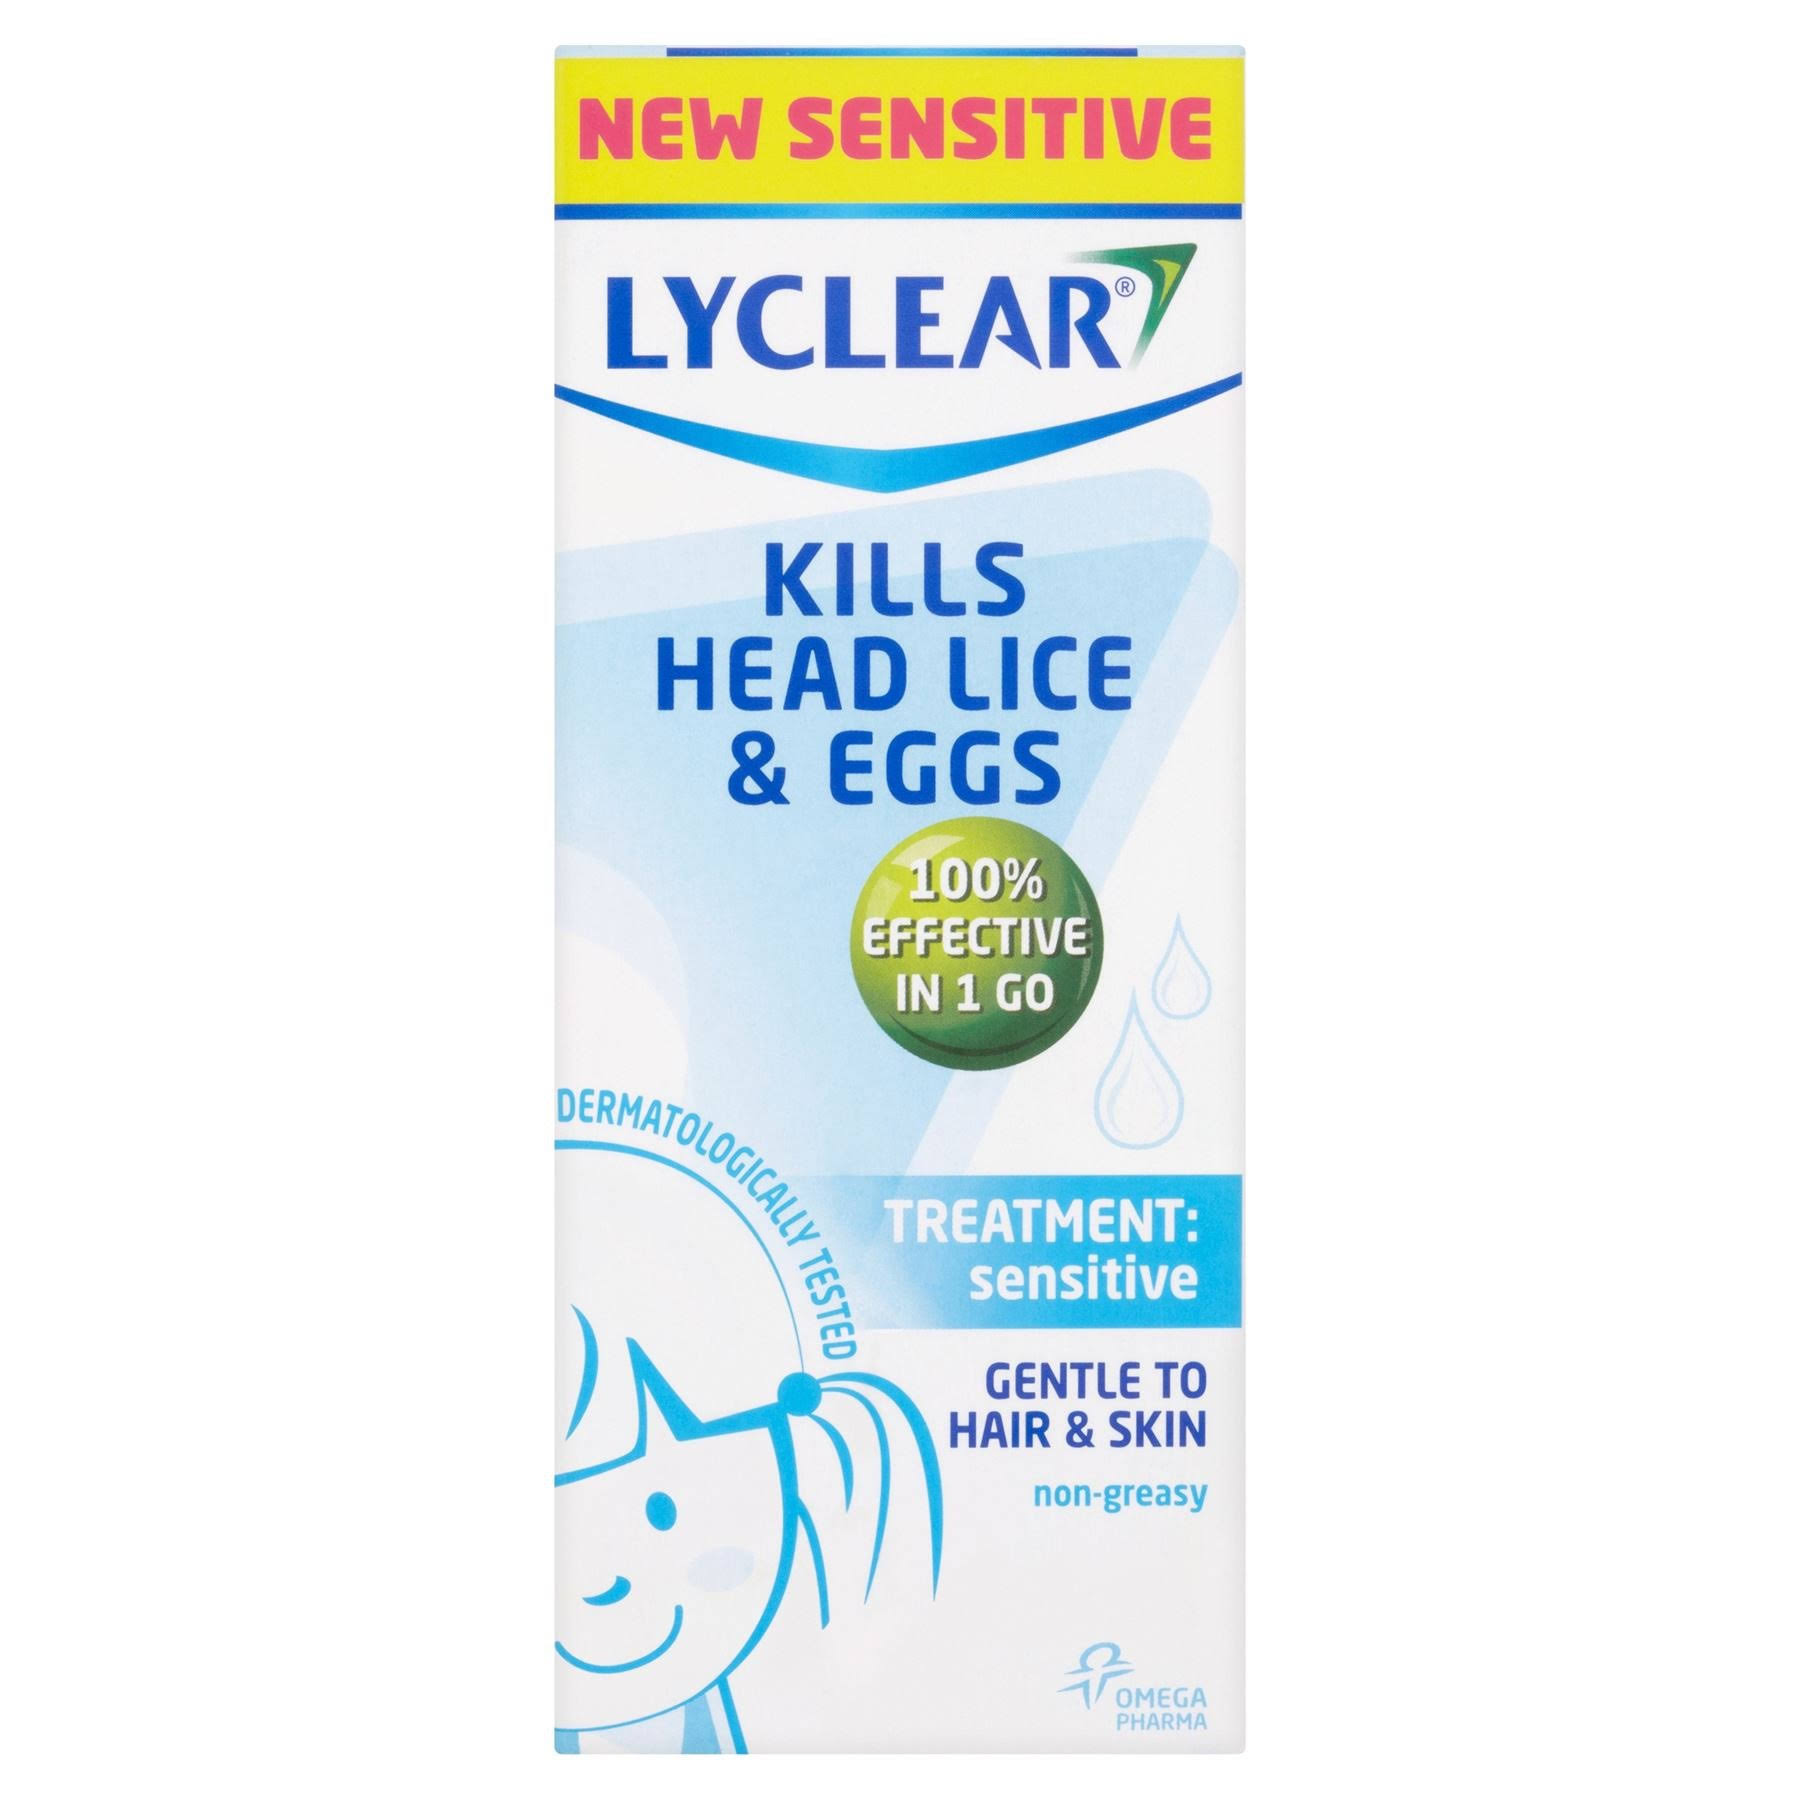 Lyclear Kills Head Lice & Eggs Treatment - Sensitive, 150ml